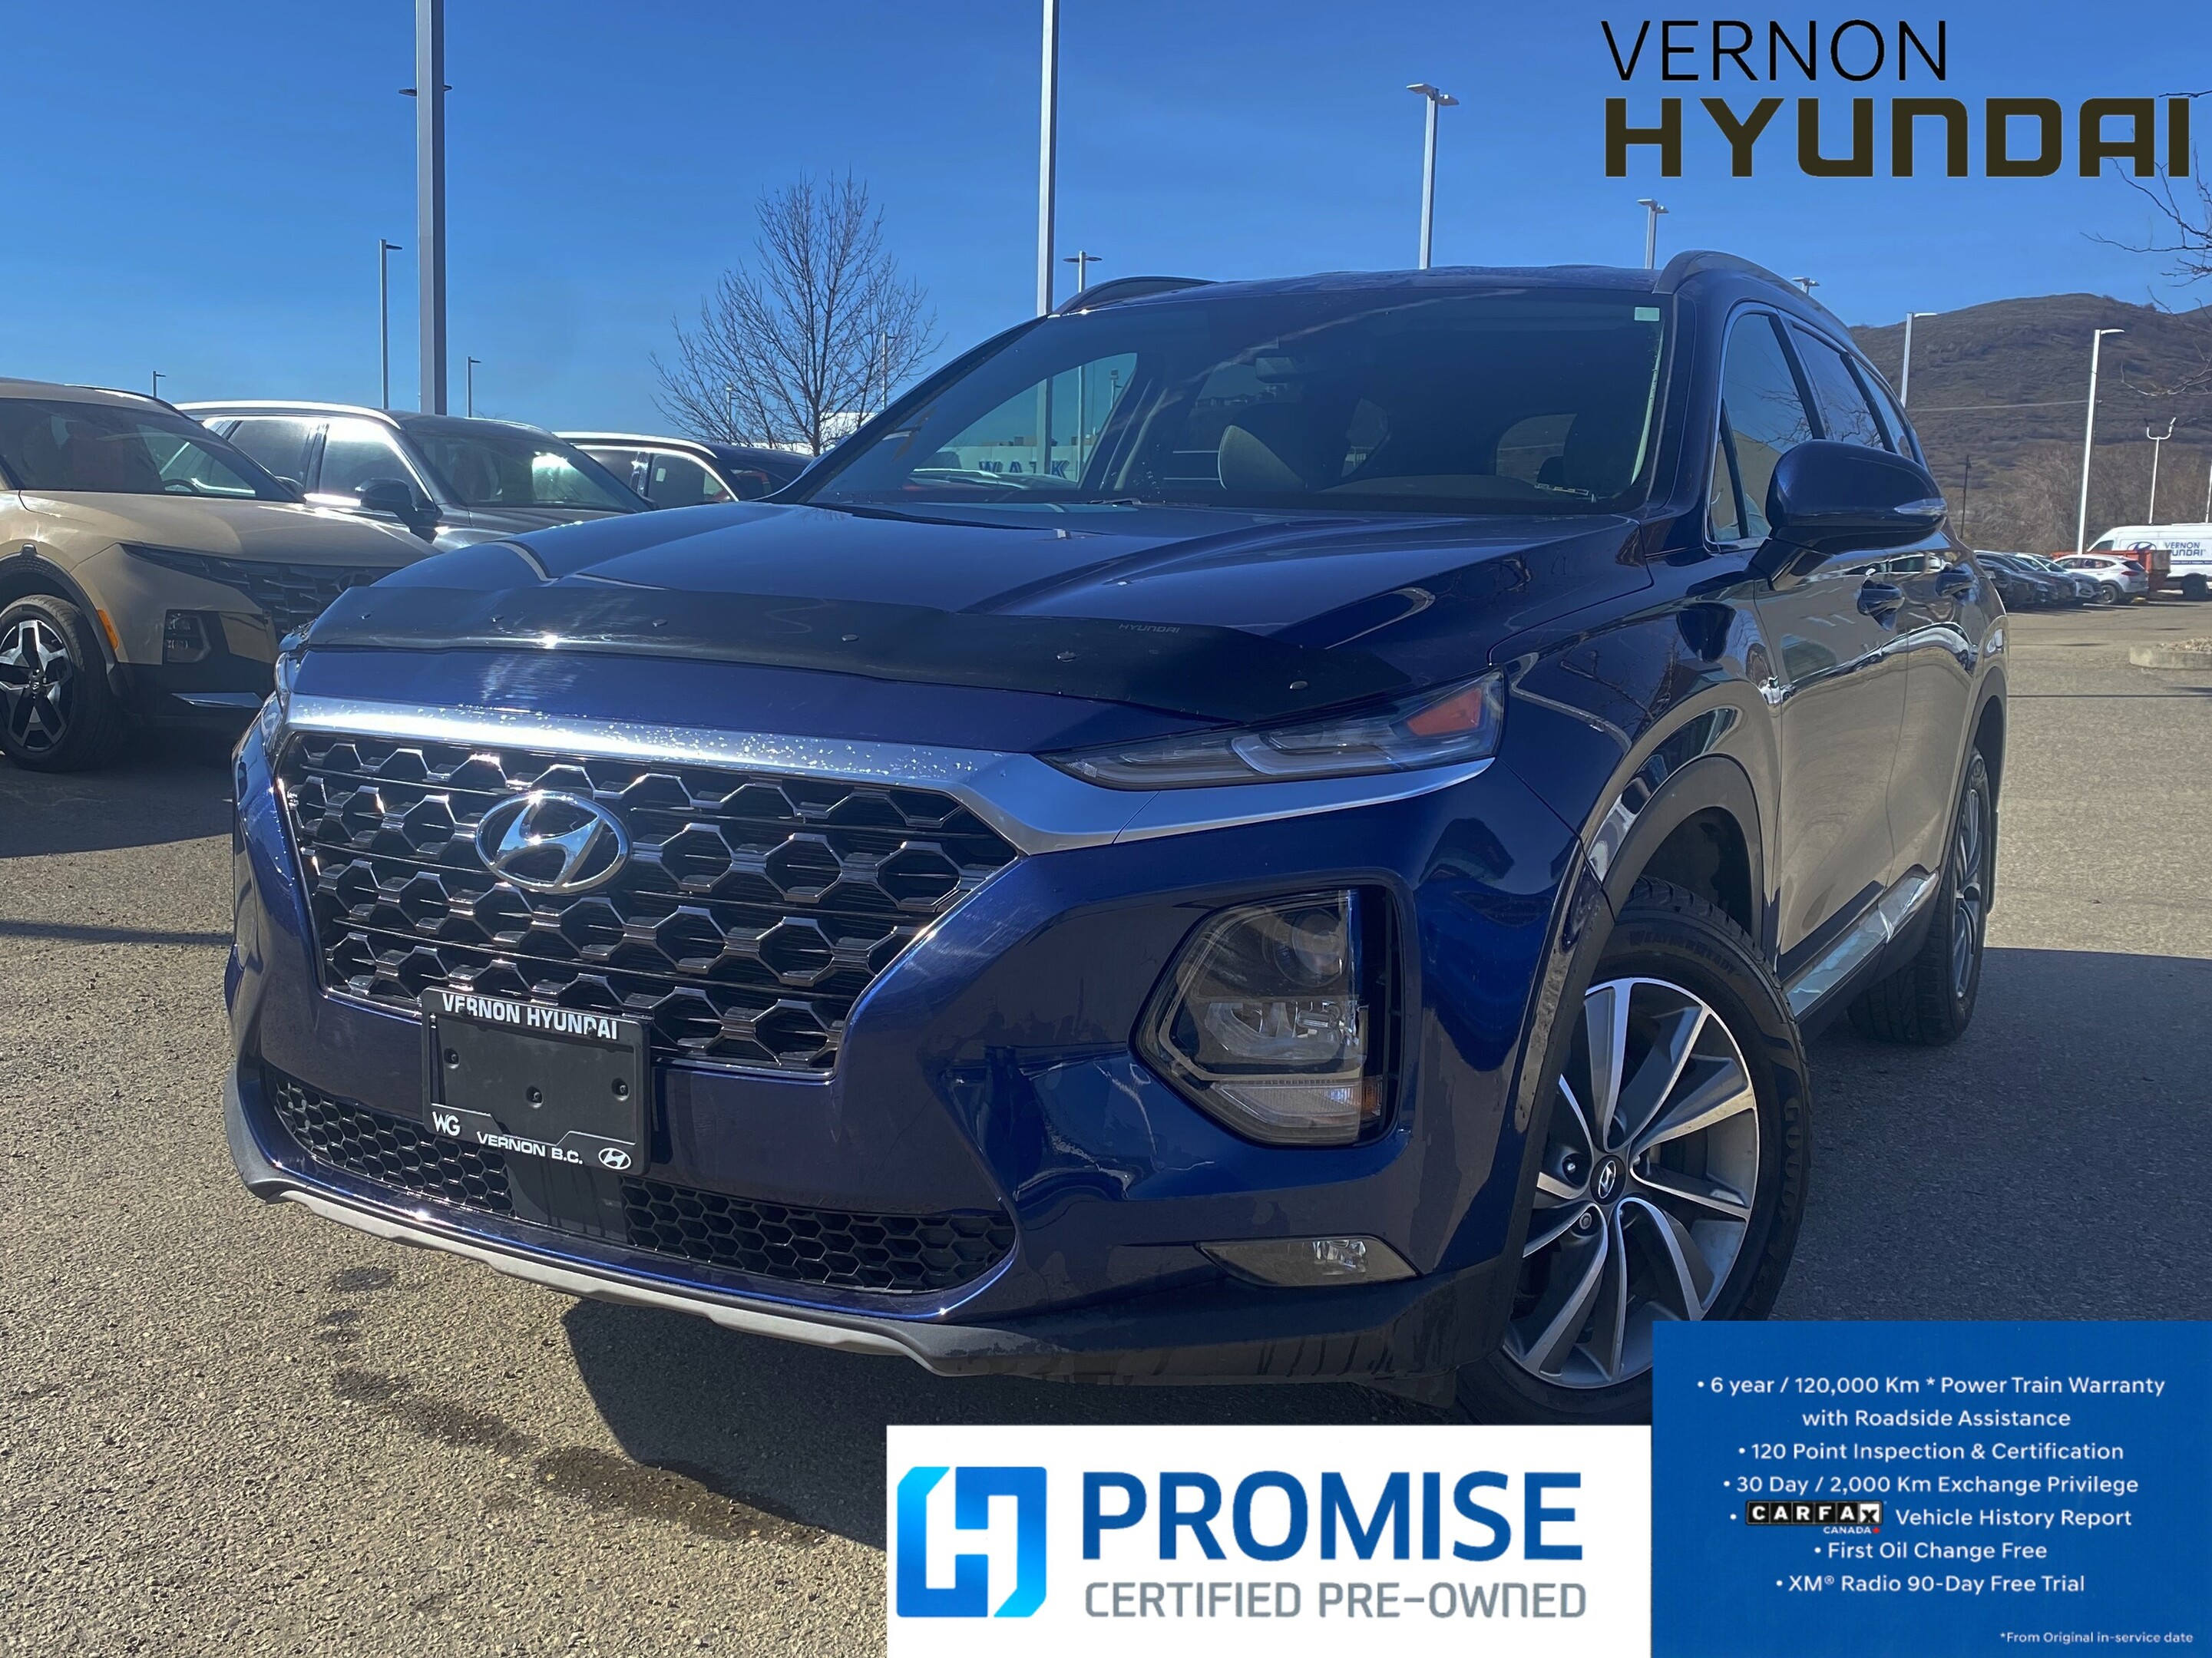 2019 Hyundai Santa Fe PREFERRED